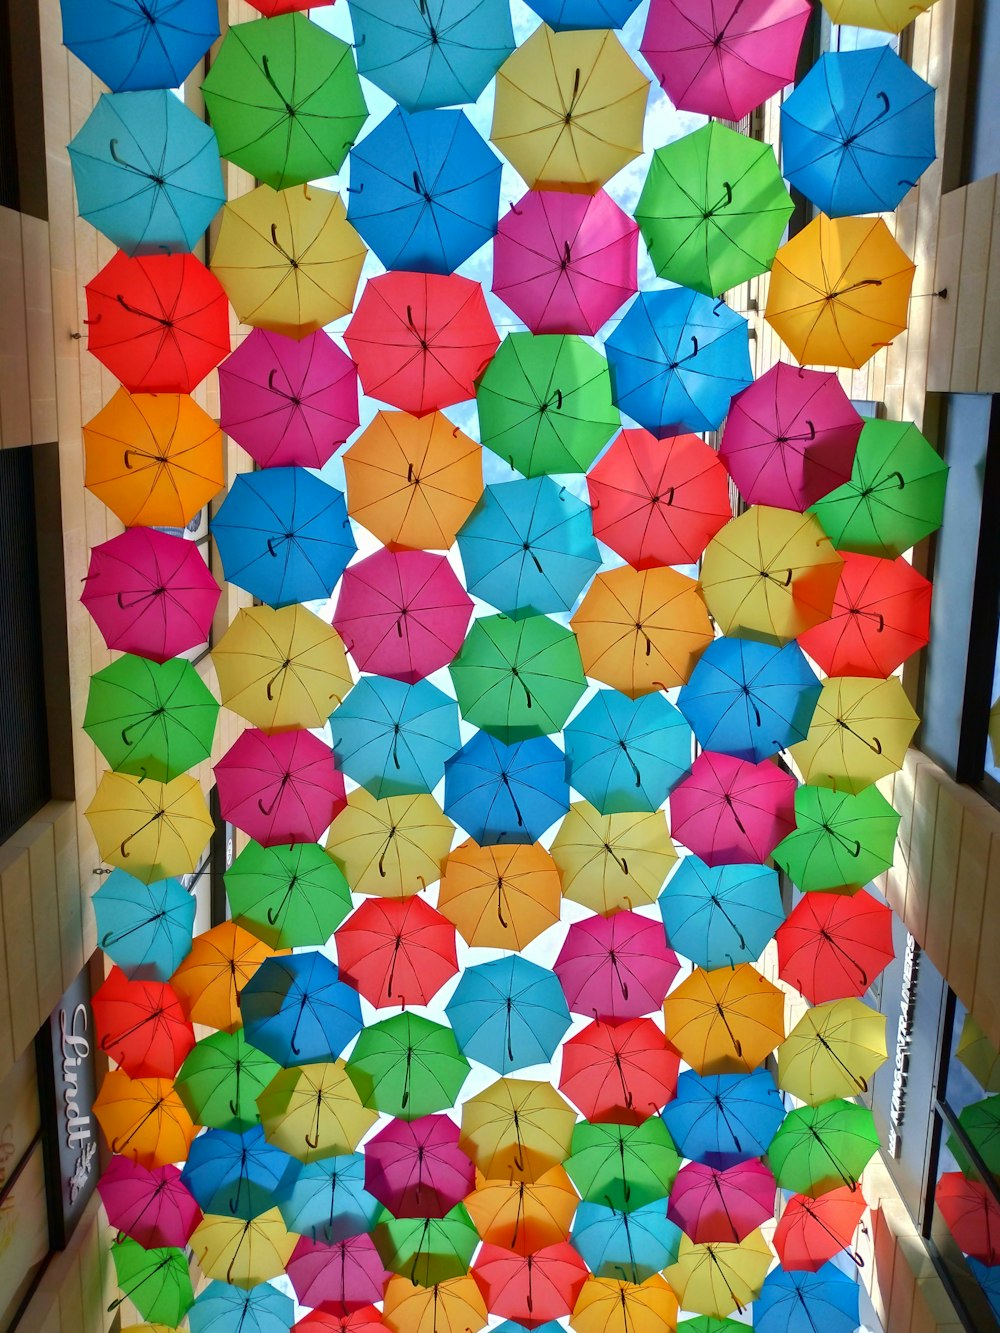 assorted-color umbrella near building